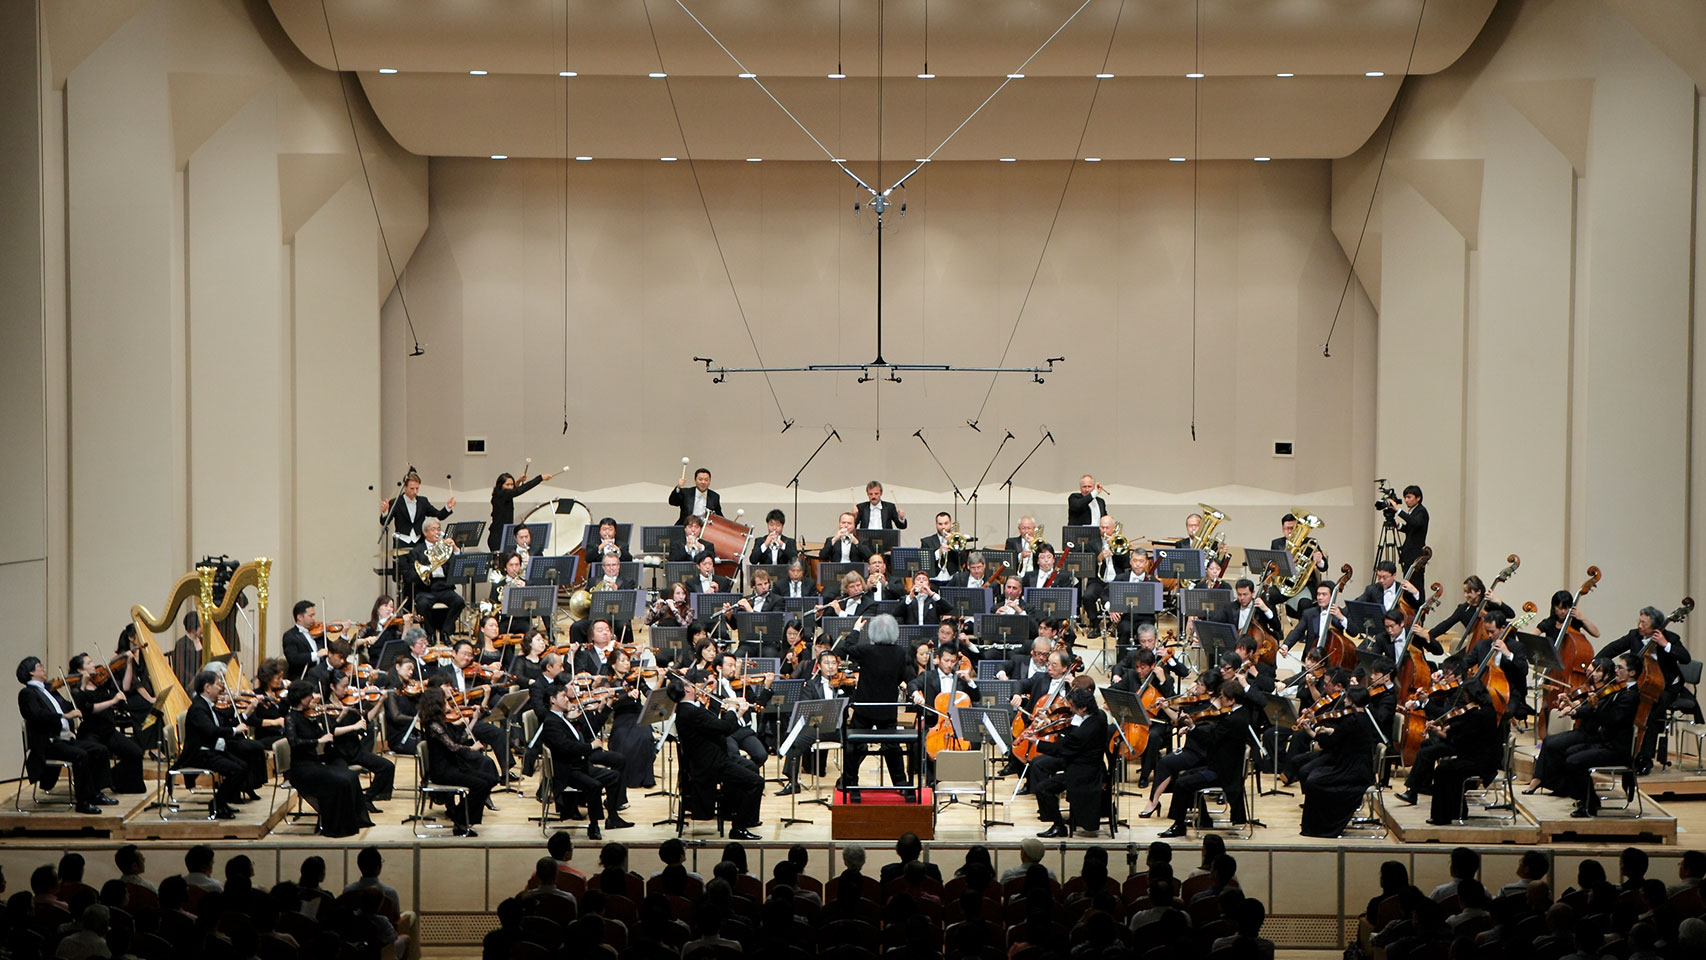 Orchestra Concertオーケストラ コンサート